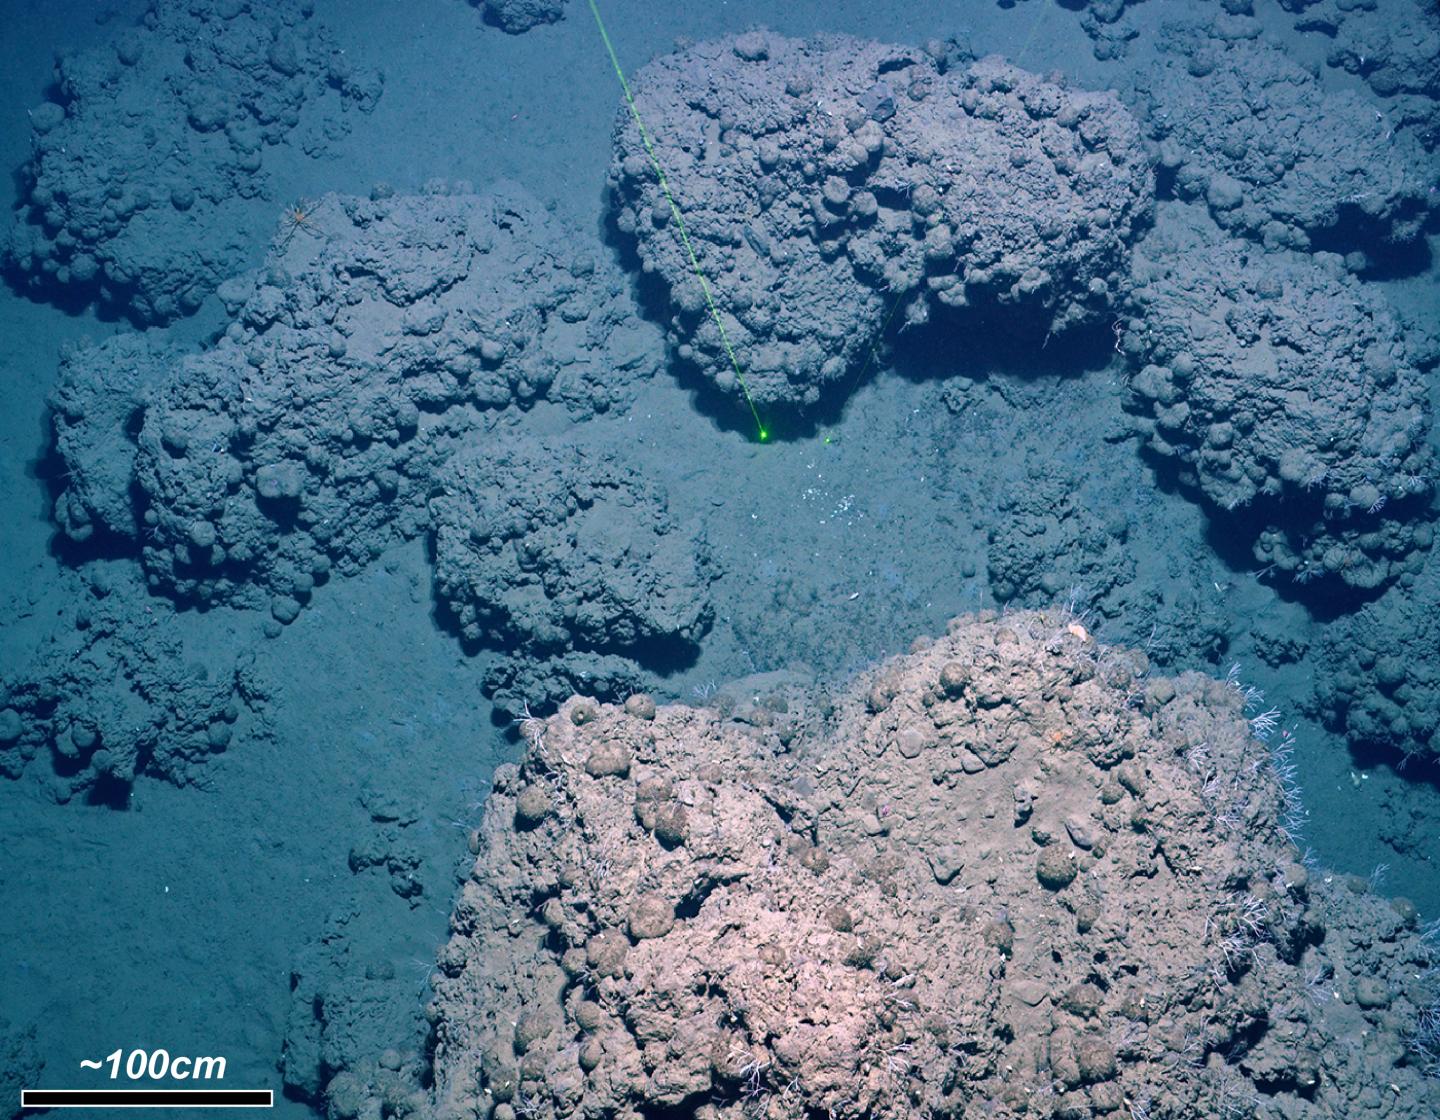 Massive Lumps of Carbonate Litter the Seafloor